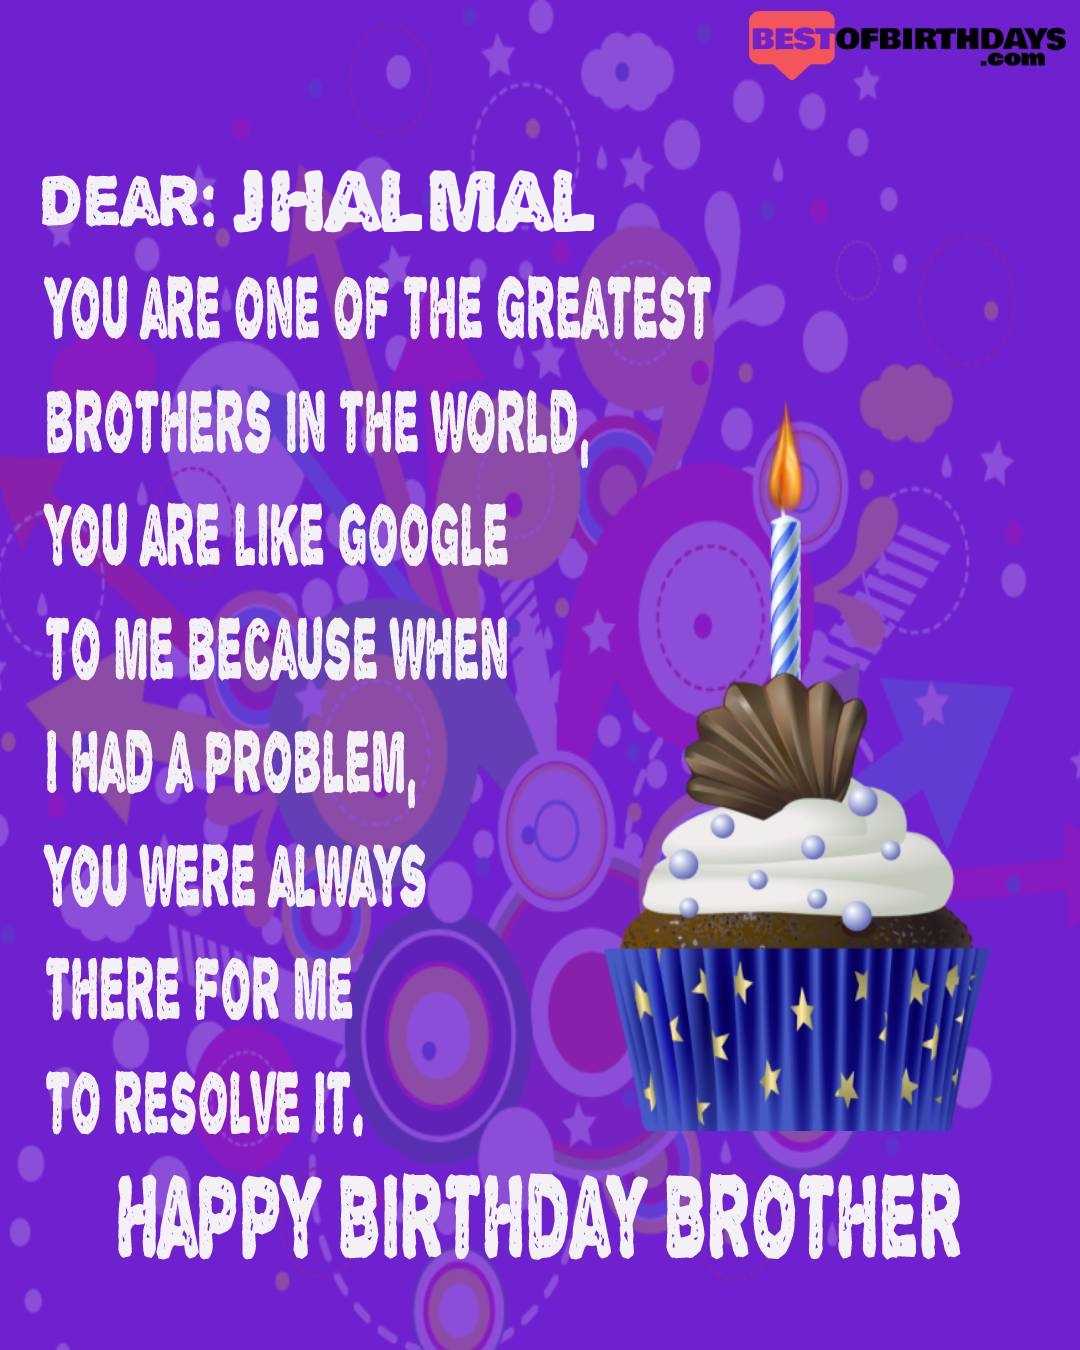 Happy birthday jhalmal bhai brother bro